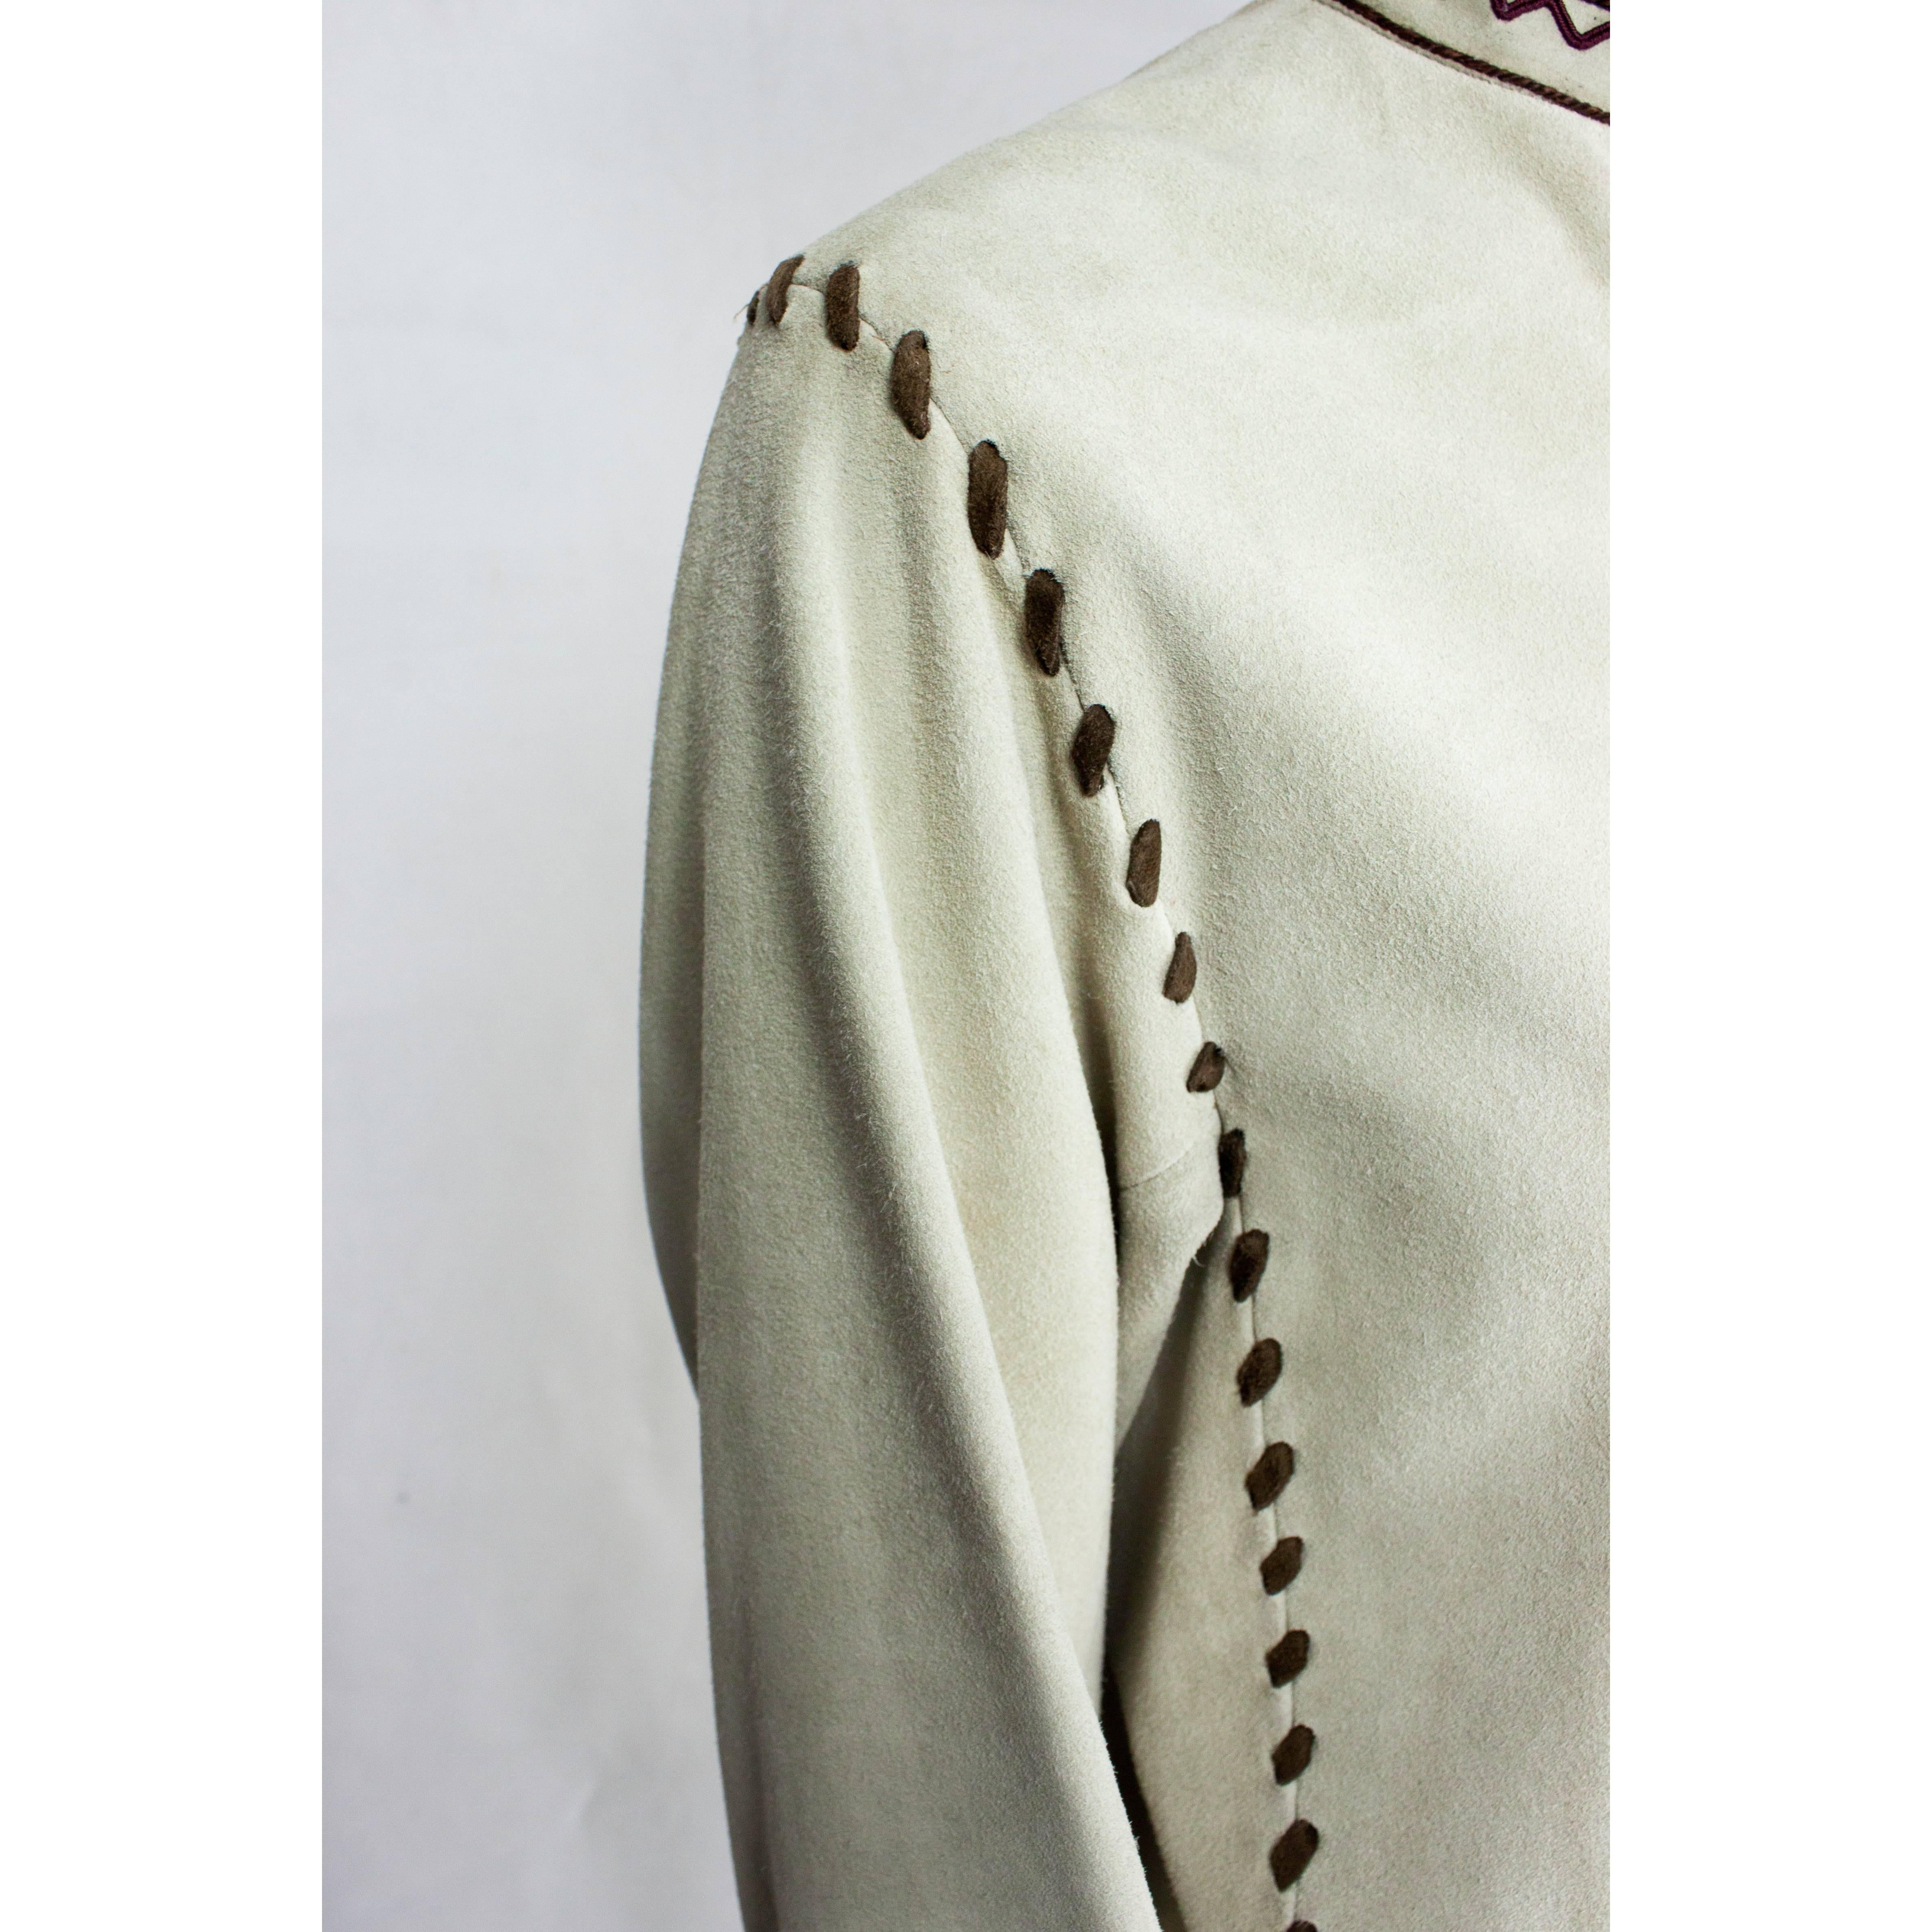 Yves Saint Laurent suede Cossack inspired jacket, circa 1976 2